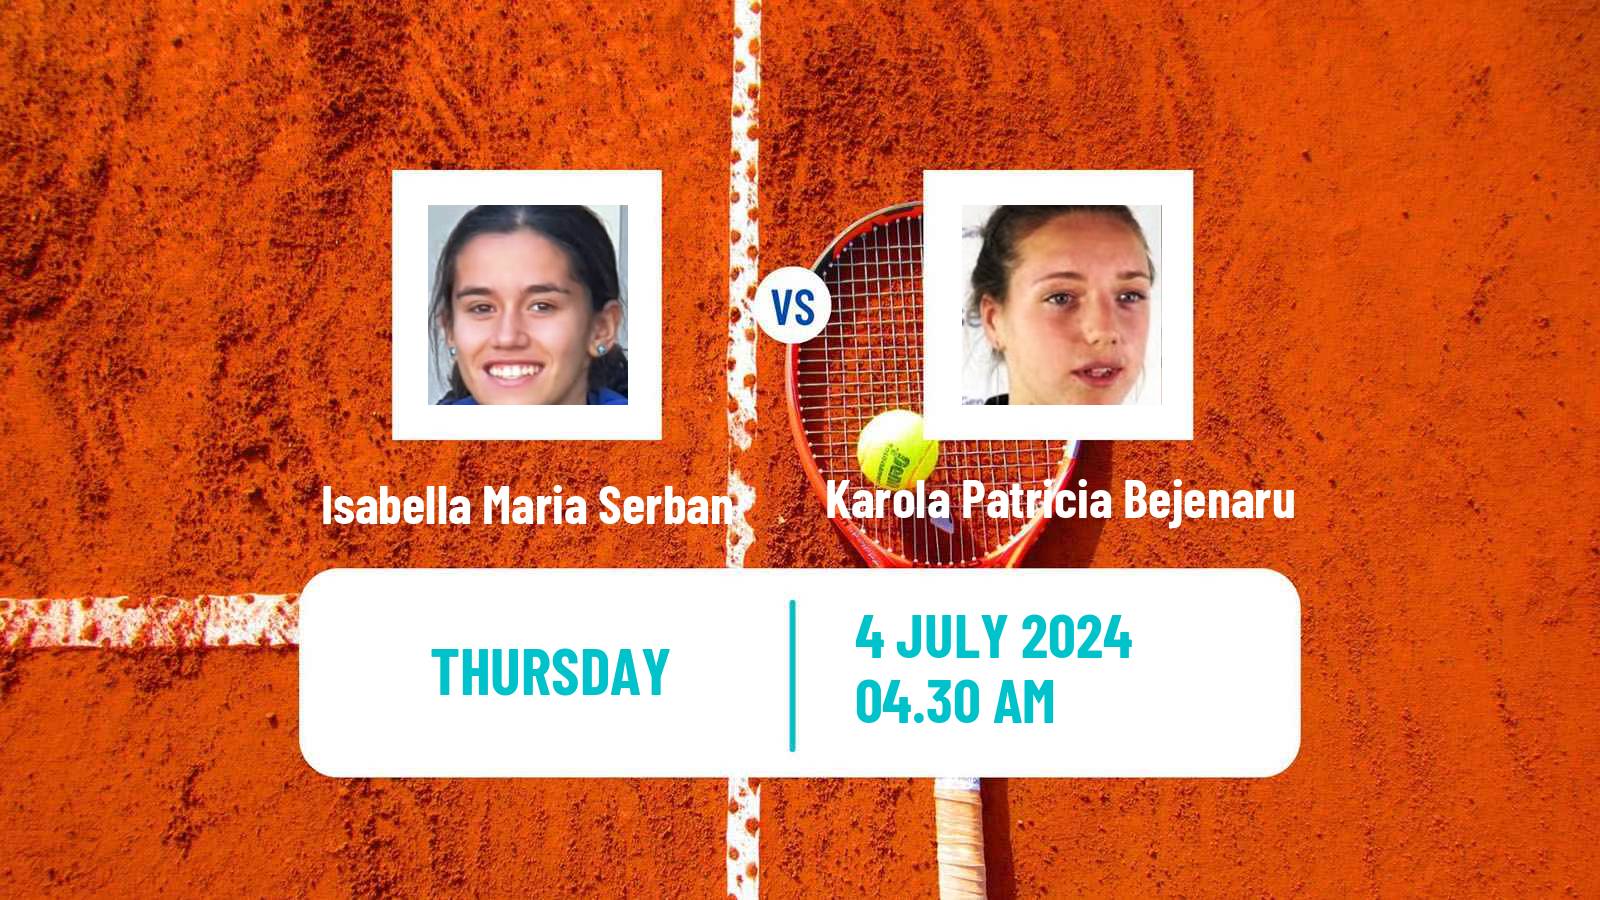 Tennis ITF W15 Galati 2 Women Isabella Maria Serban - Karola Patricia Bejenaru